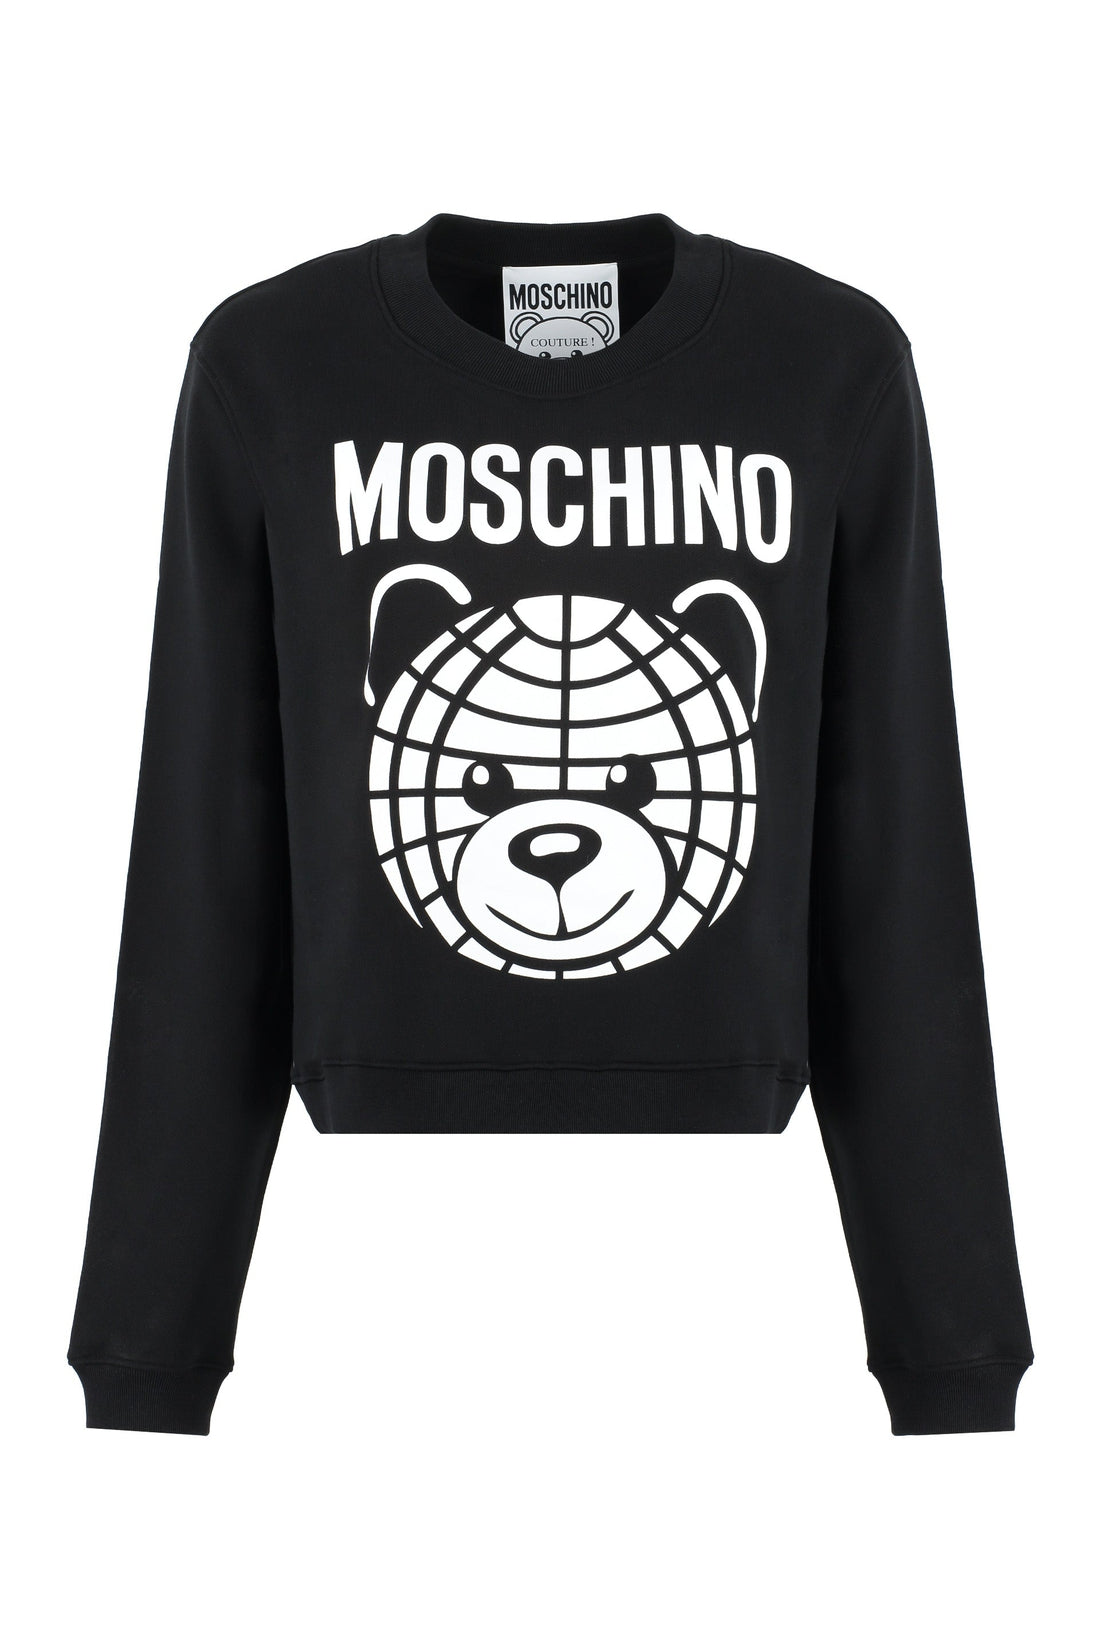 Moschino-OUTLET-SALE-Printed cotton sweatshirt-ARCHIVIST